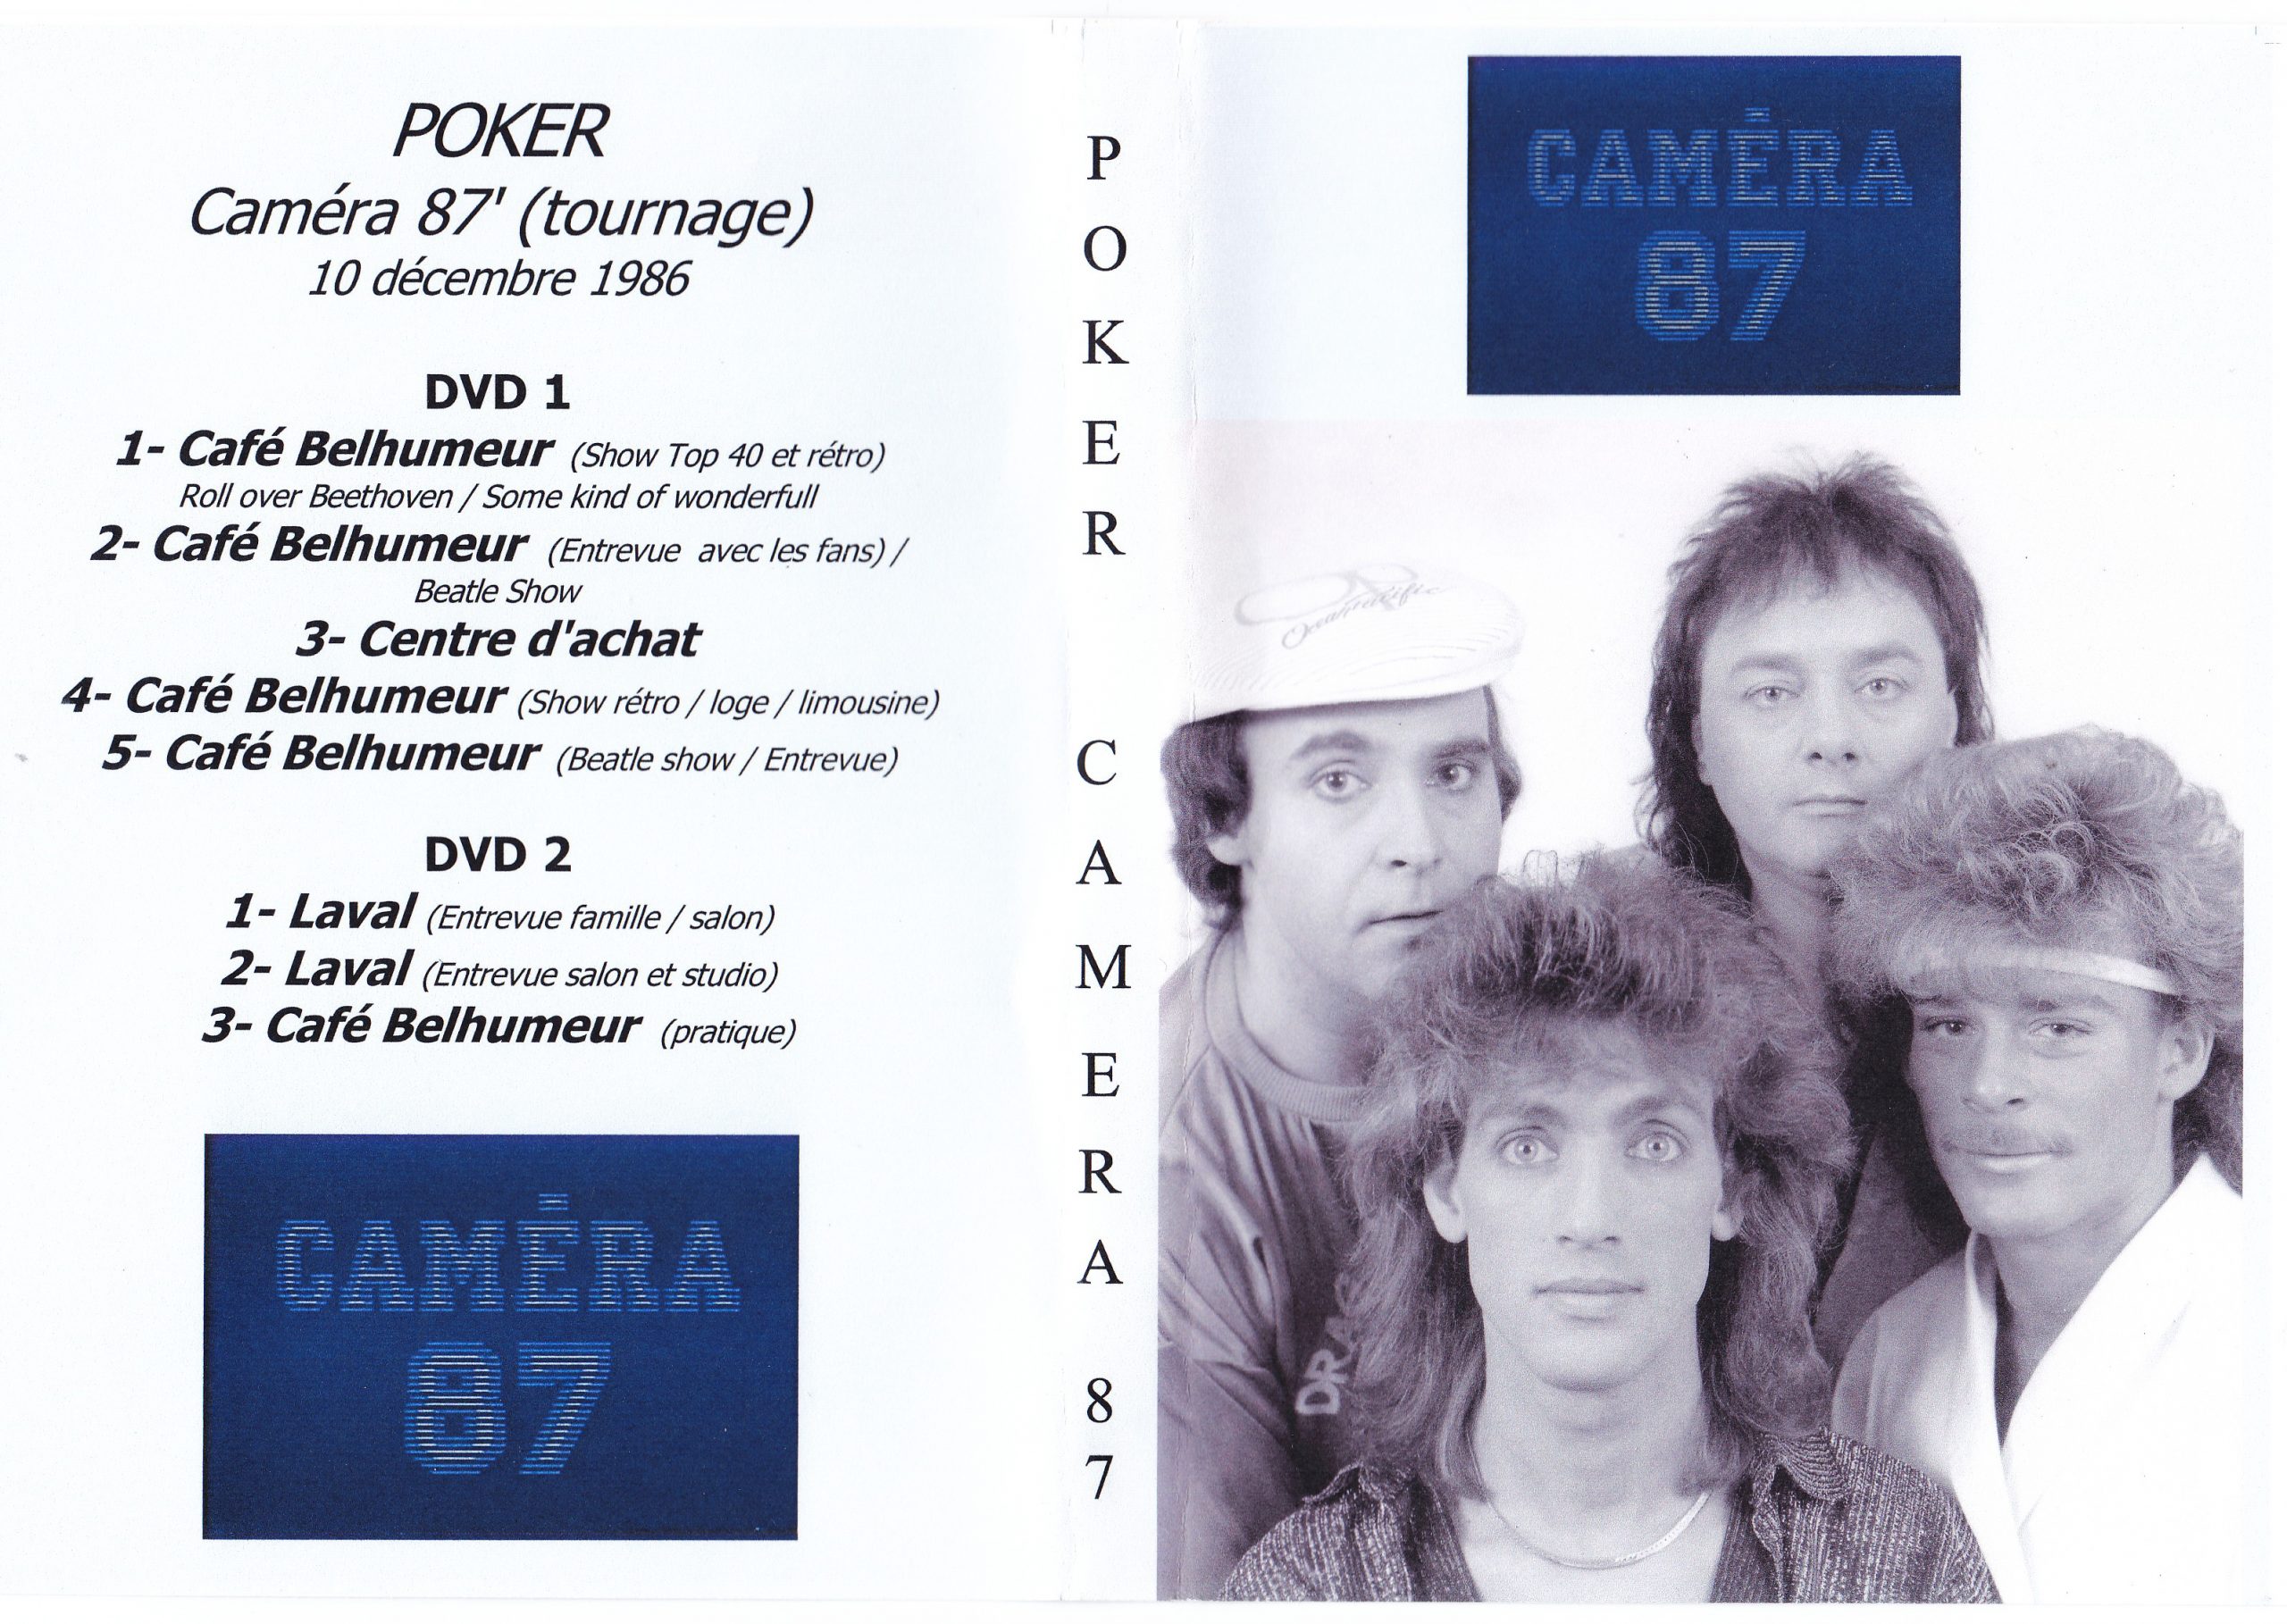 1987-poker-camera-87